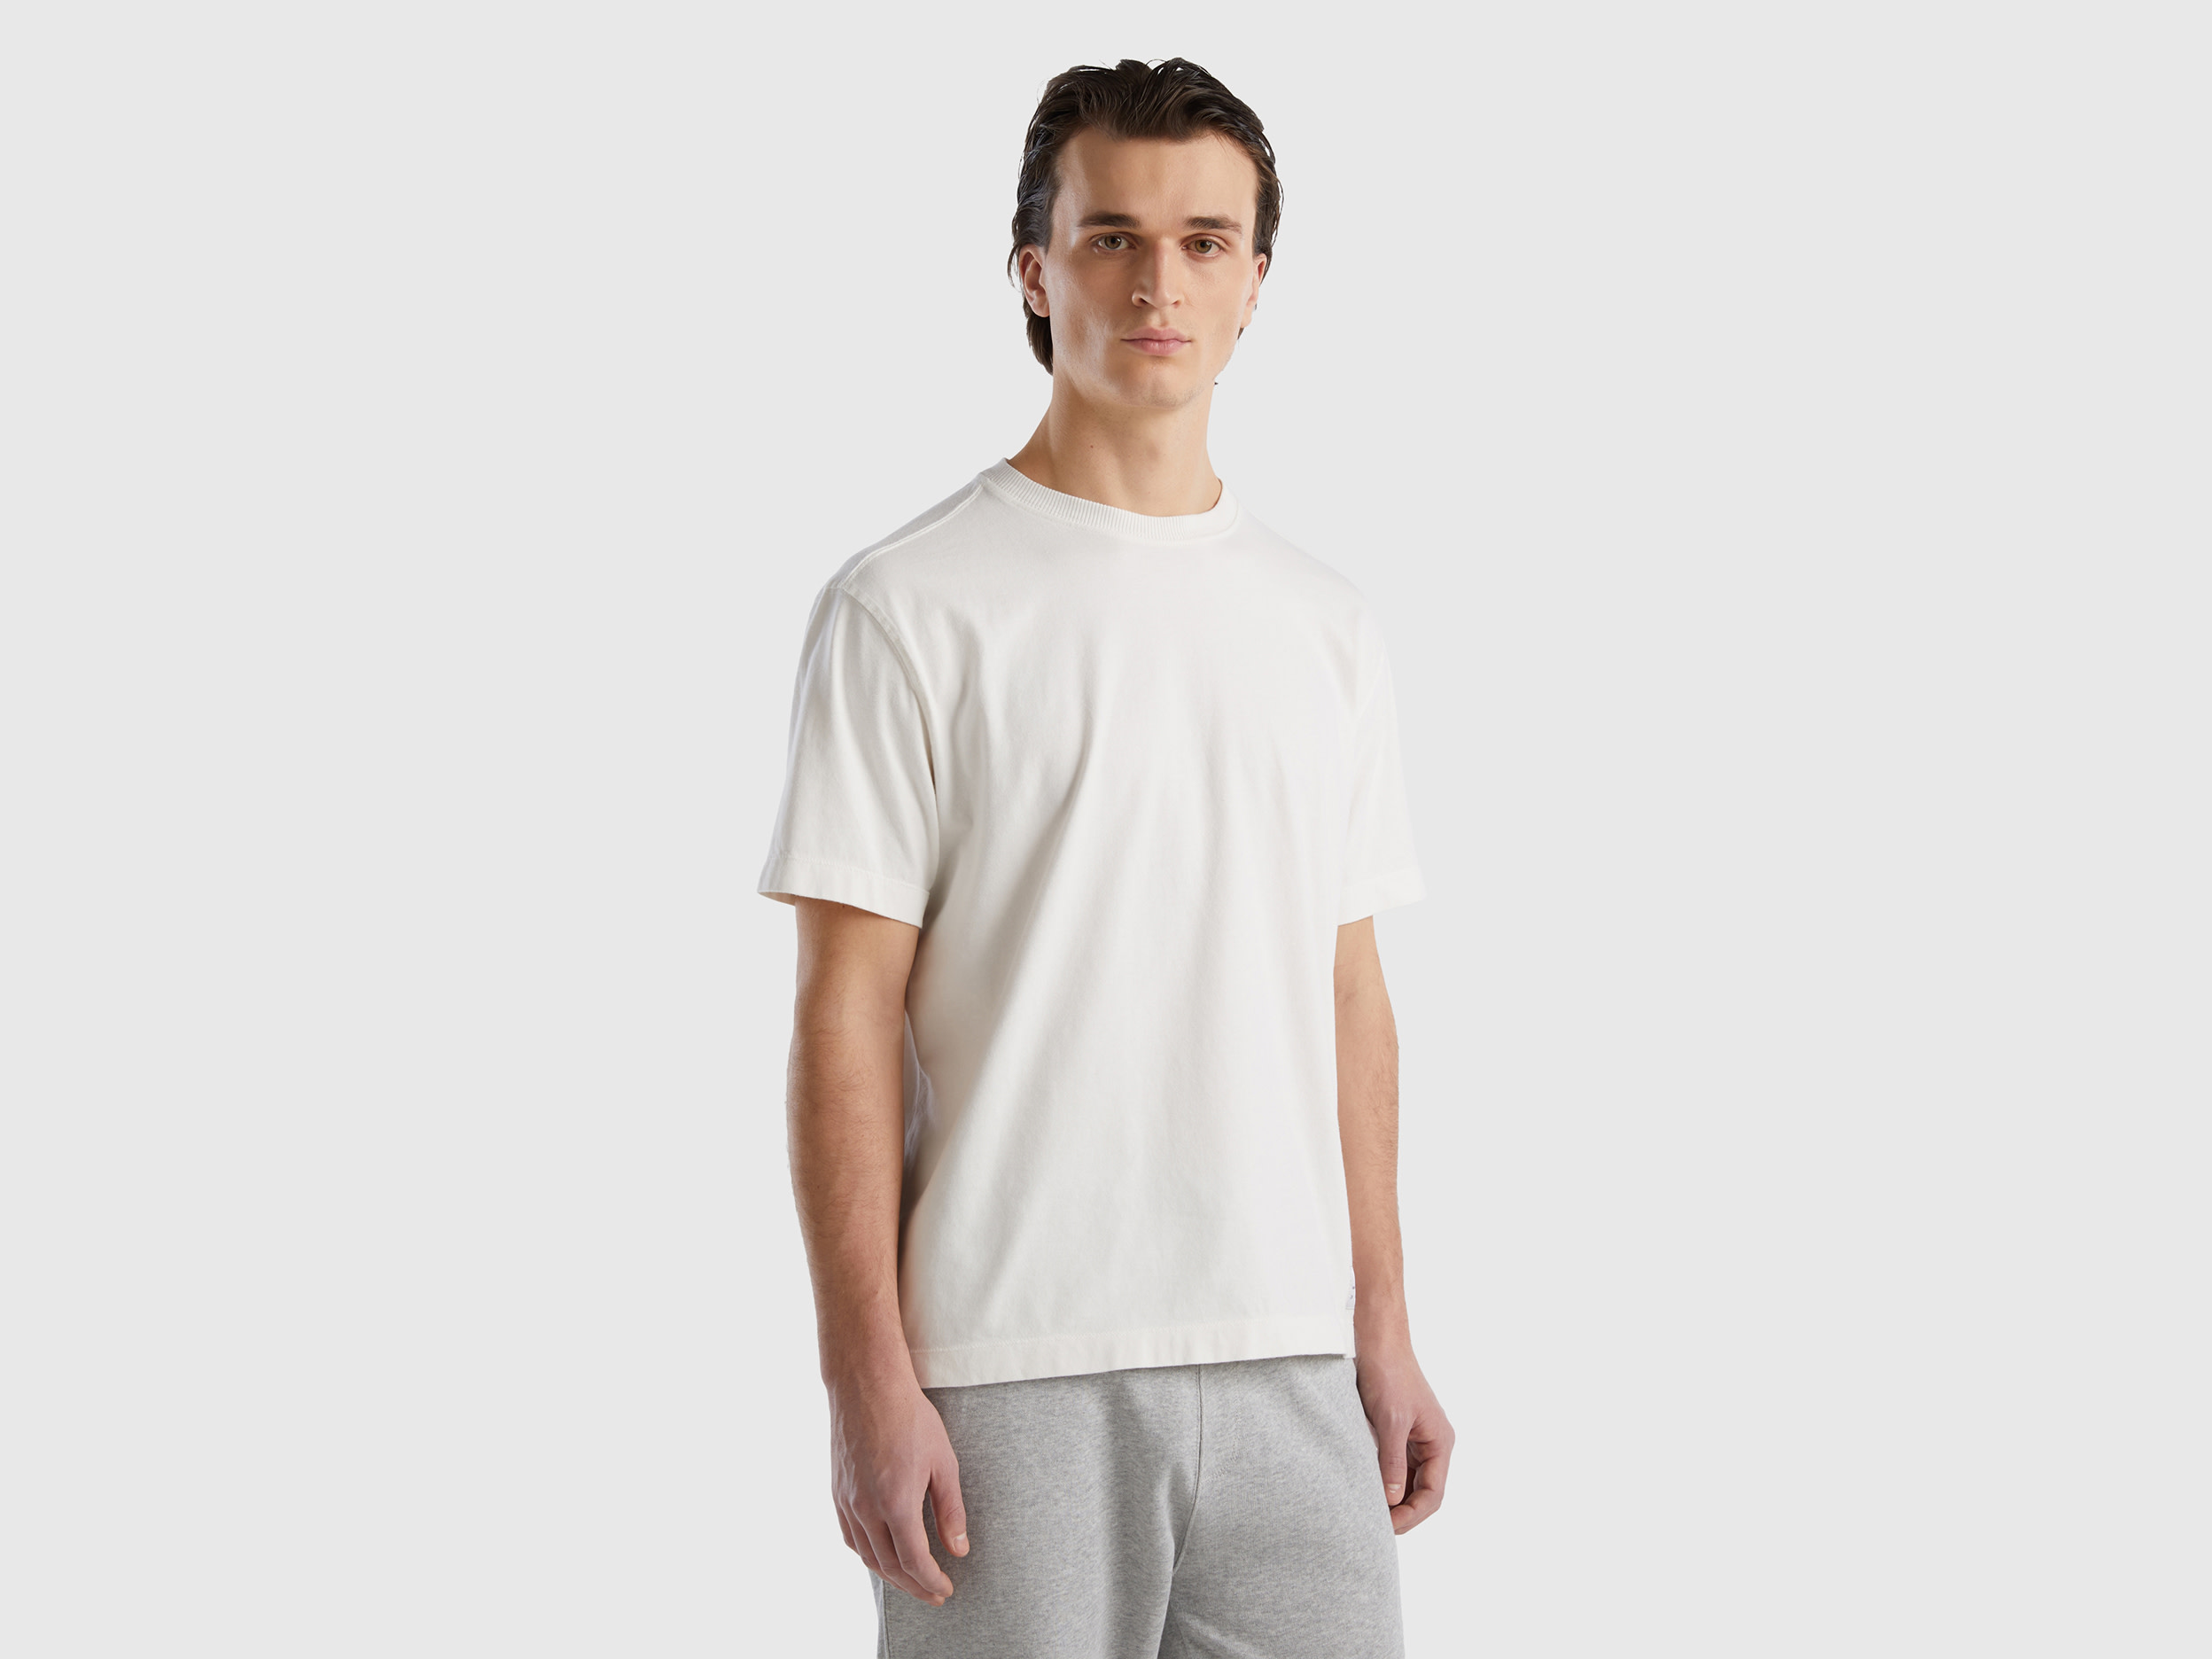 Image of Benetton, 100% Organic Cotton Crew Neck T-shirt, size M, Creamy White, Men